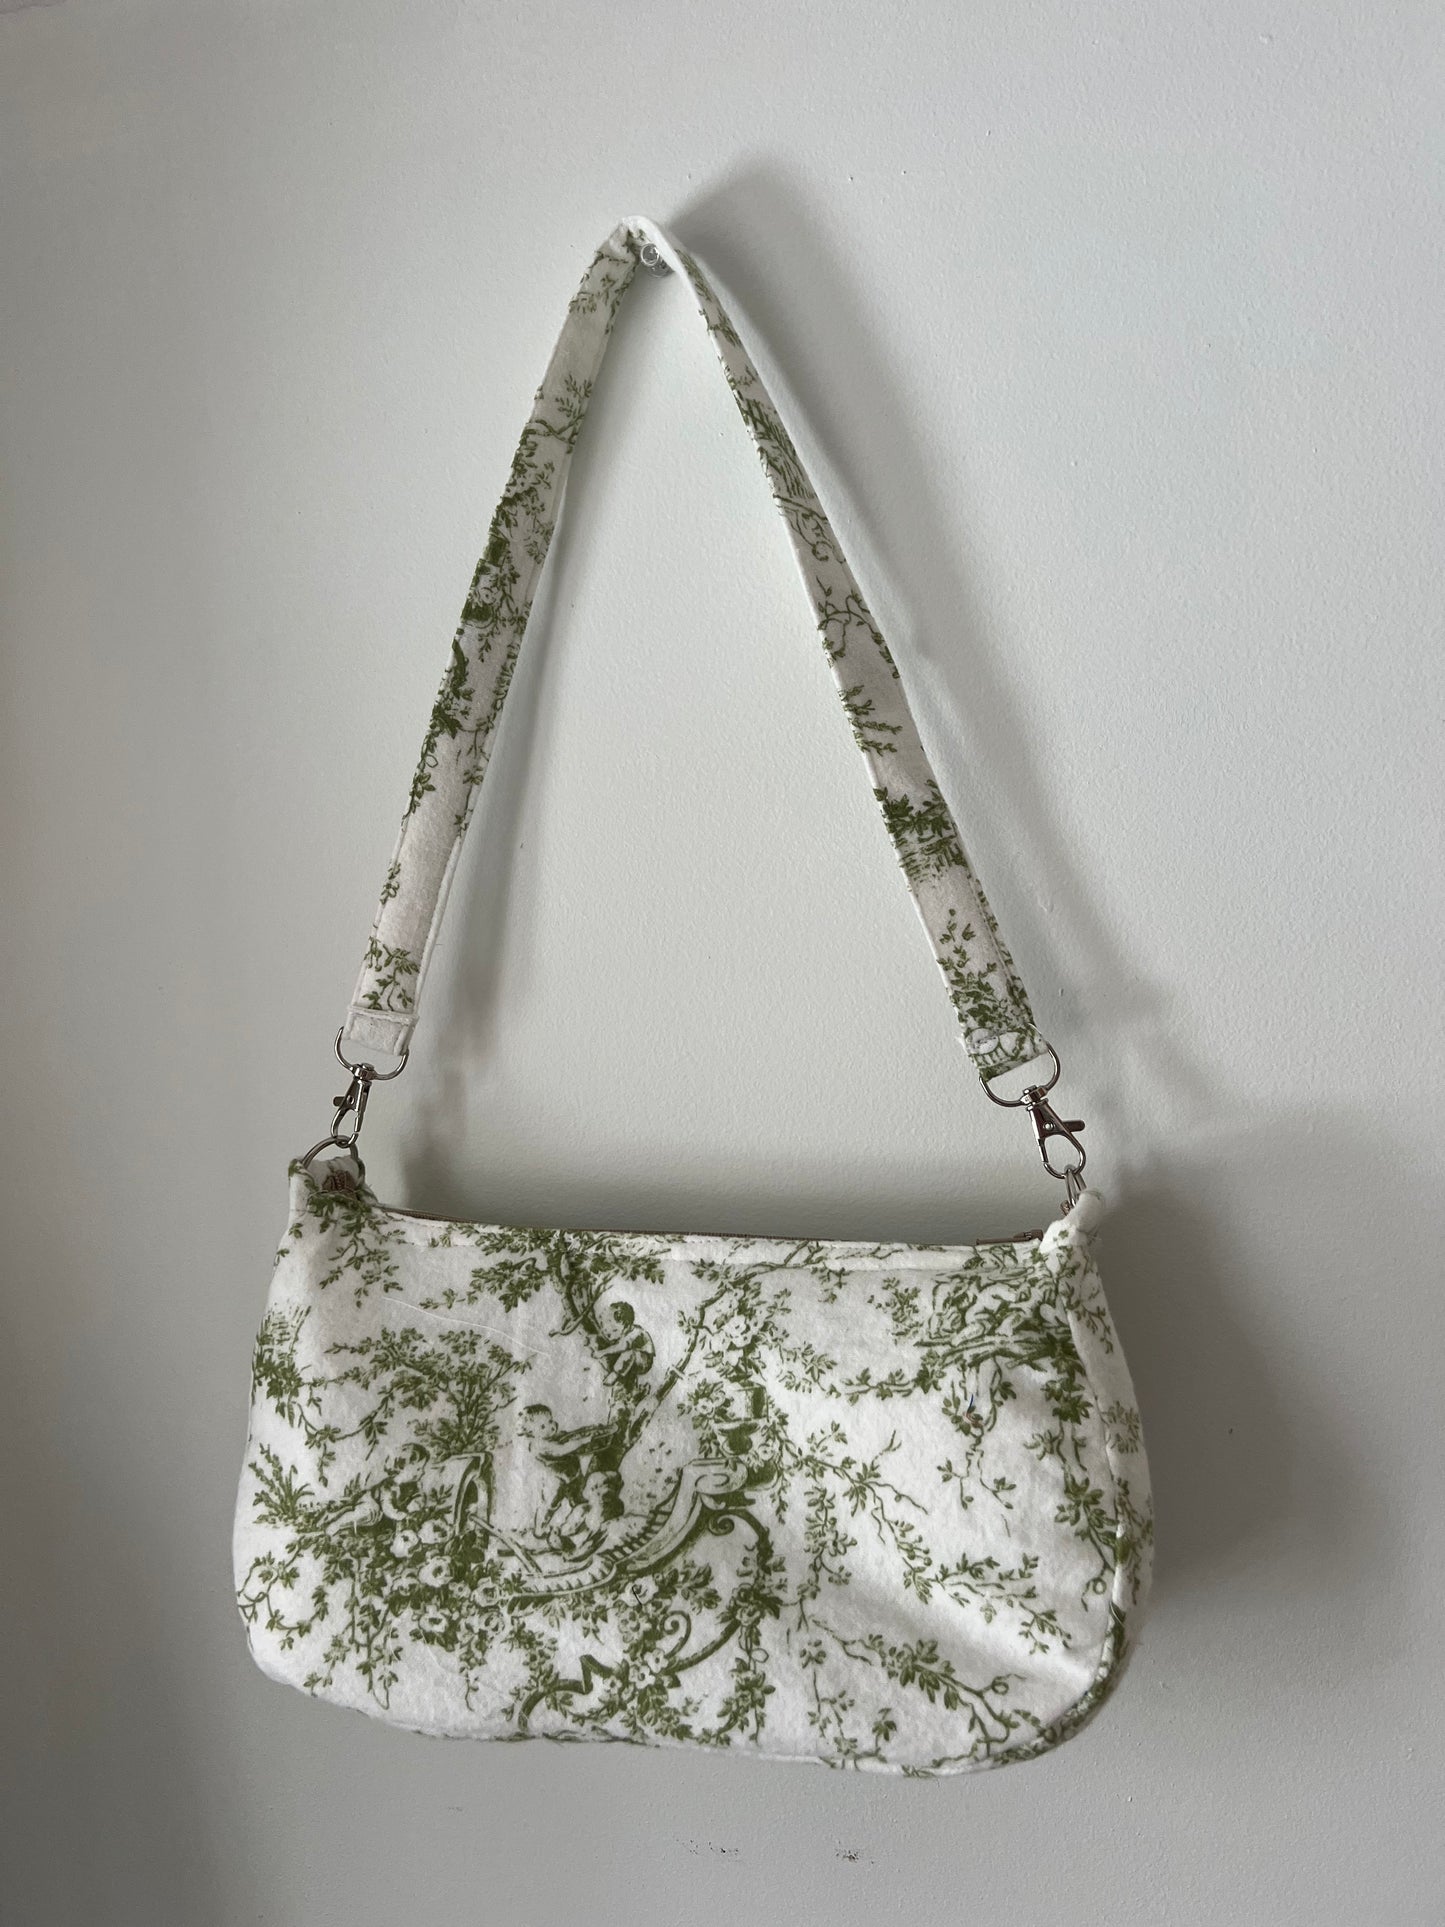 Oldies fabric handbag